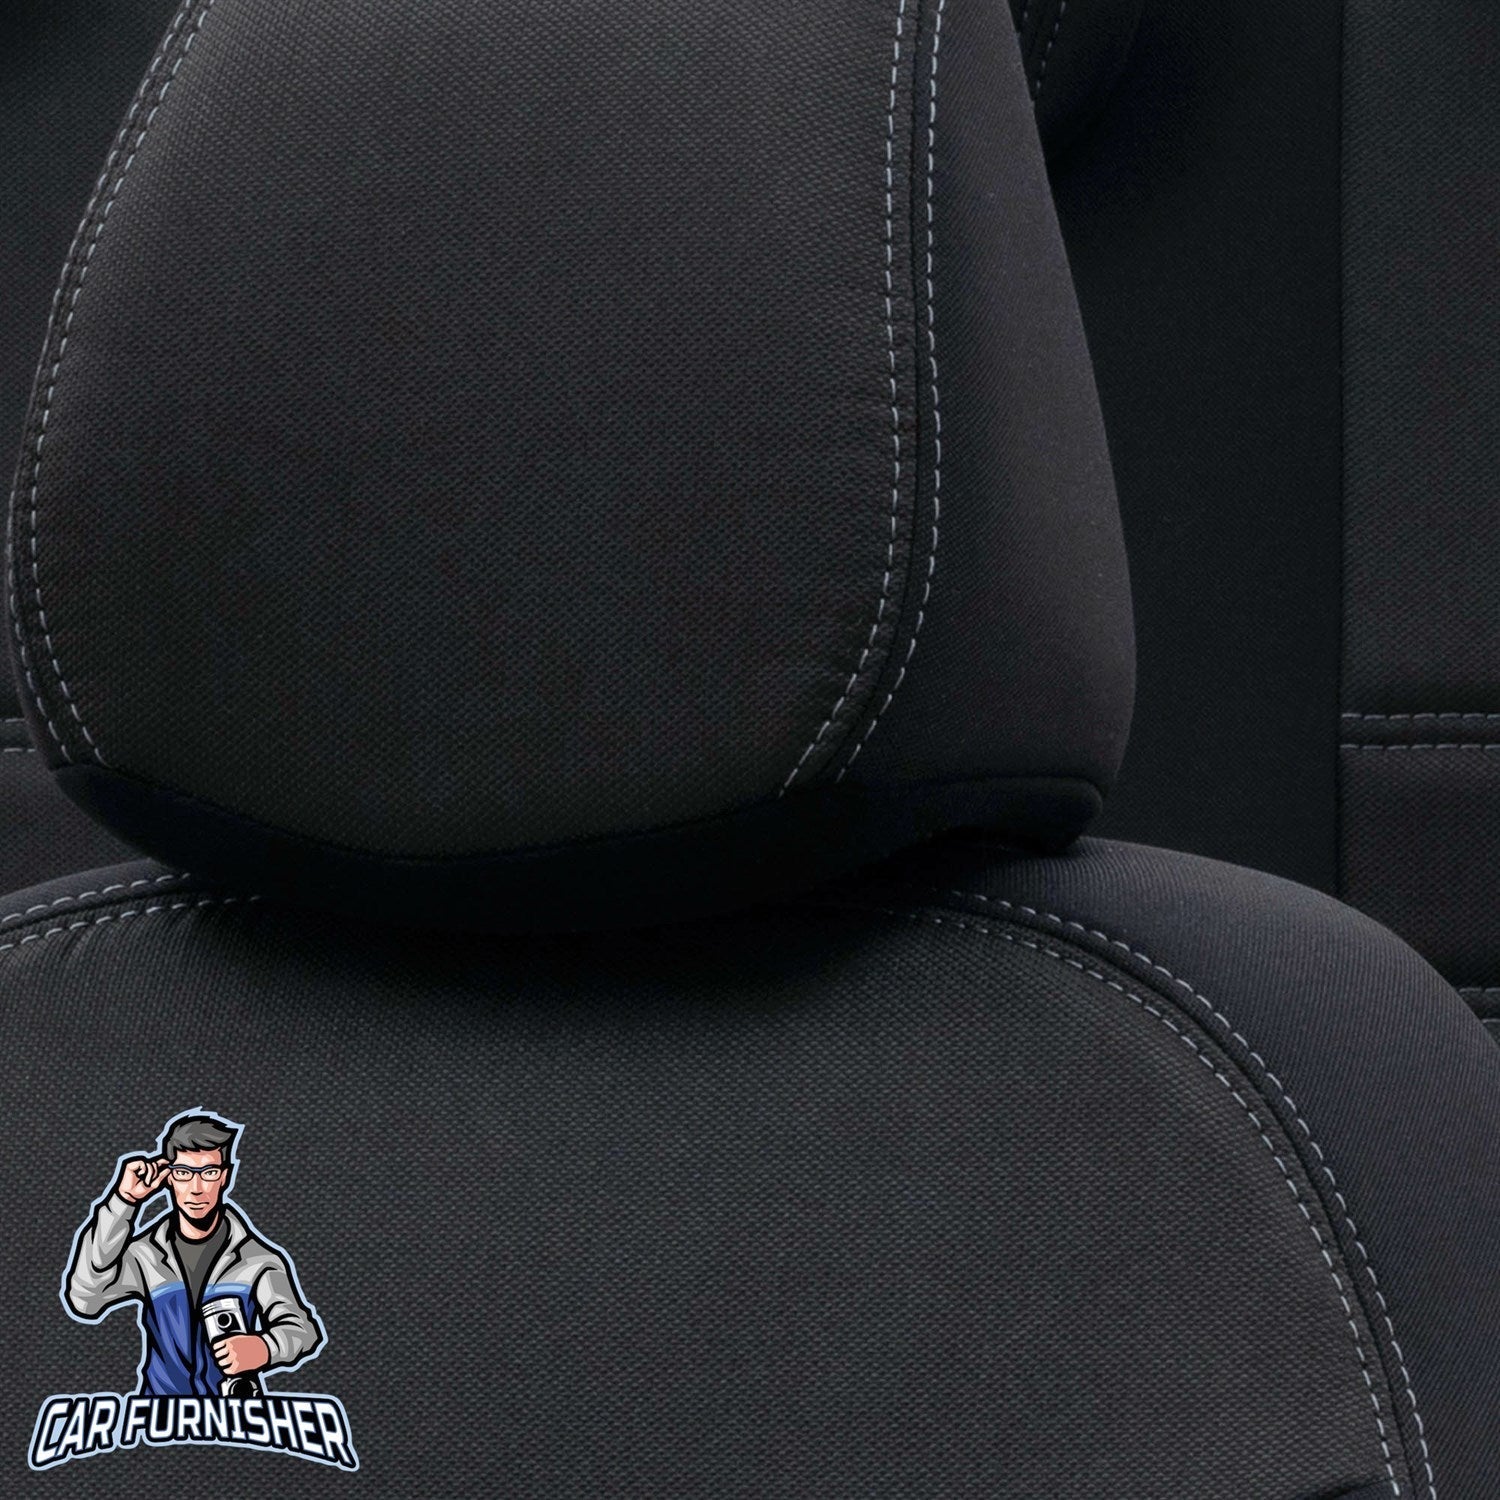 Fiat Fullback Seat Covers Original Jacquard Design Black Jacquard Fabric